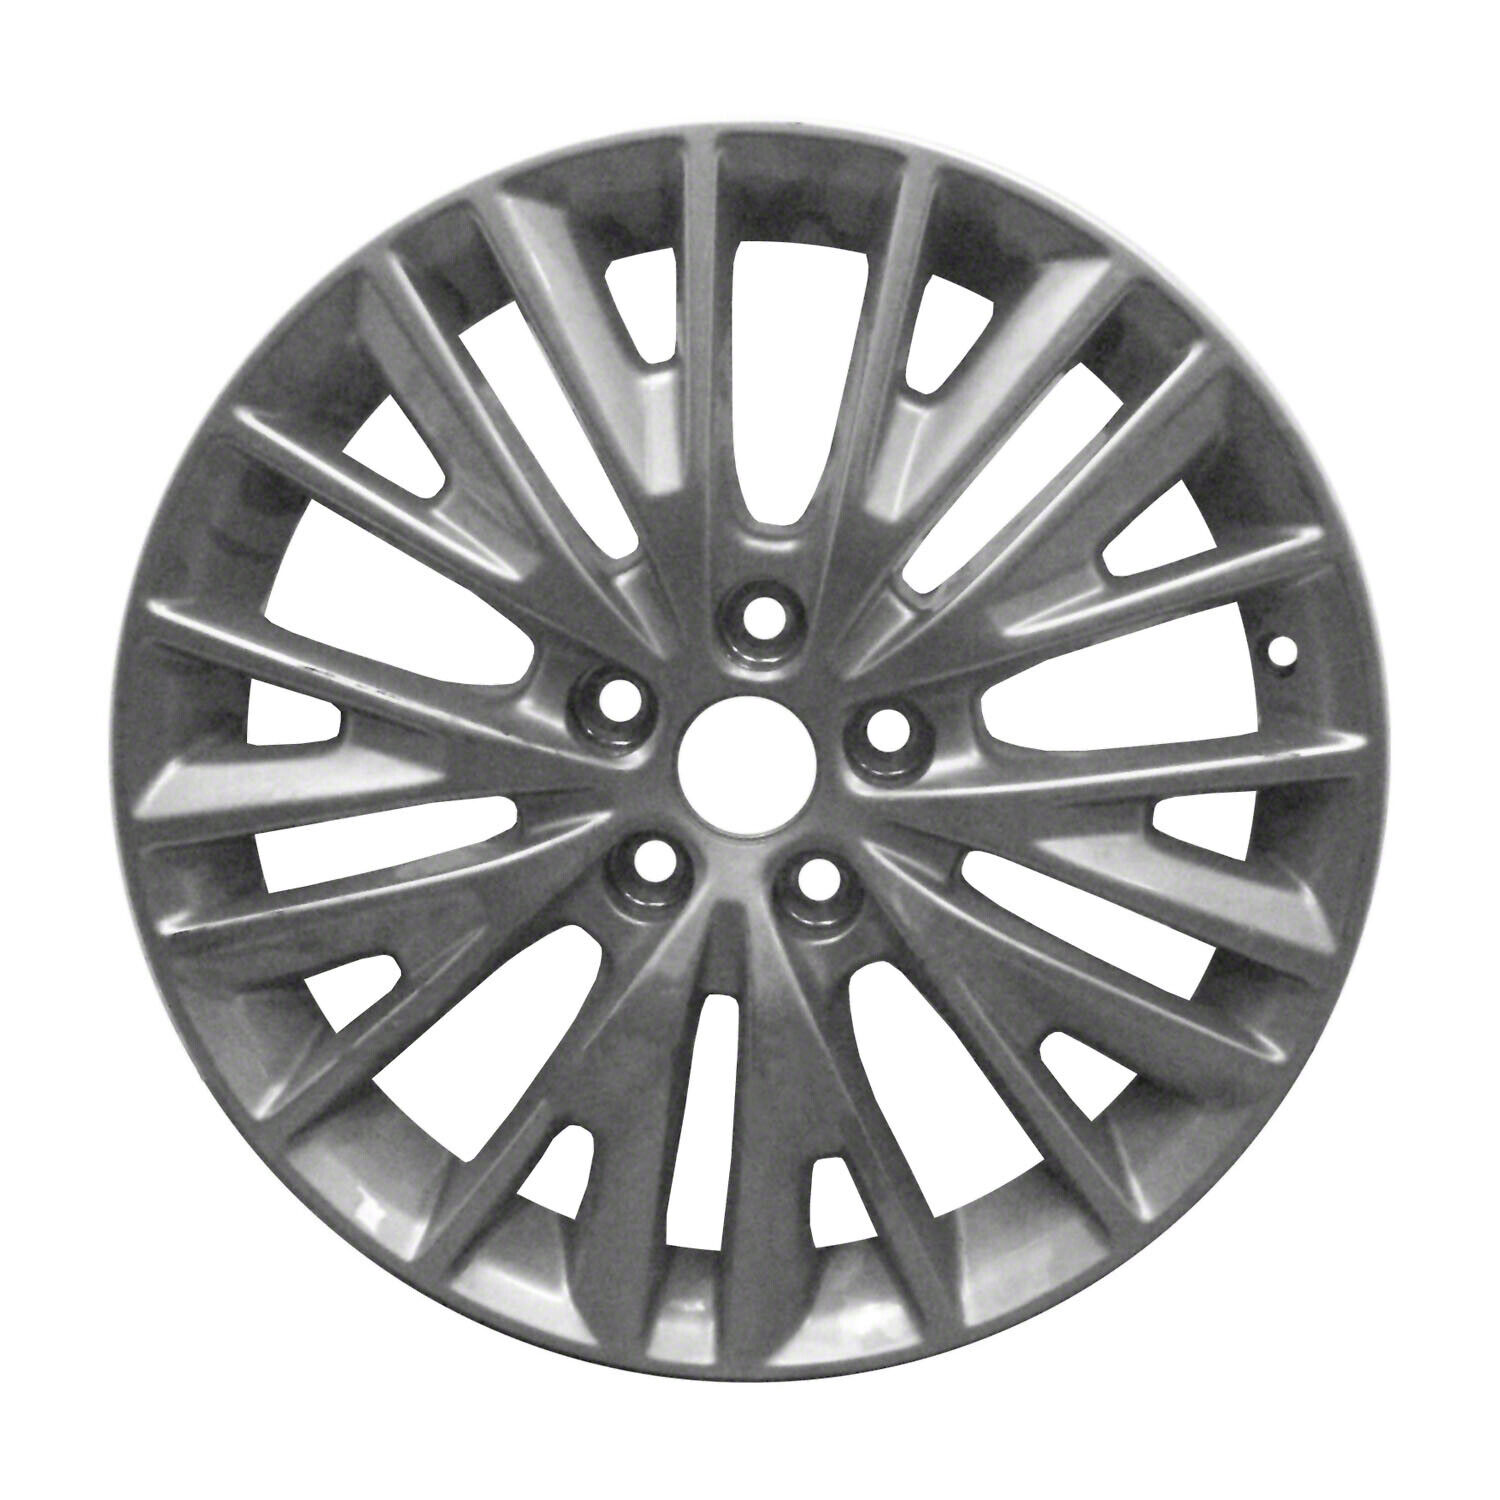 10013 Reconditioned OEM Aluminum Wheel 17x7 fits 2015-2018 Ford Focus